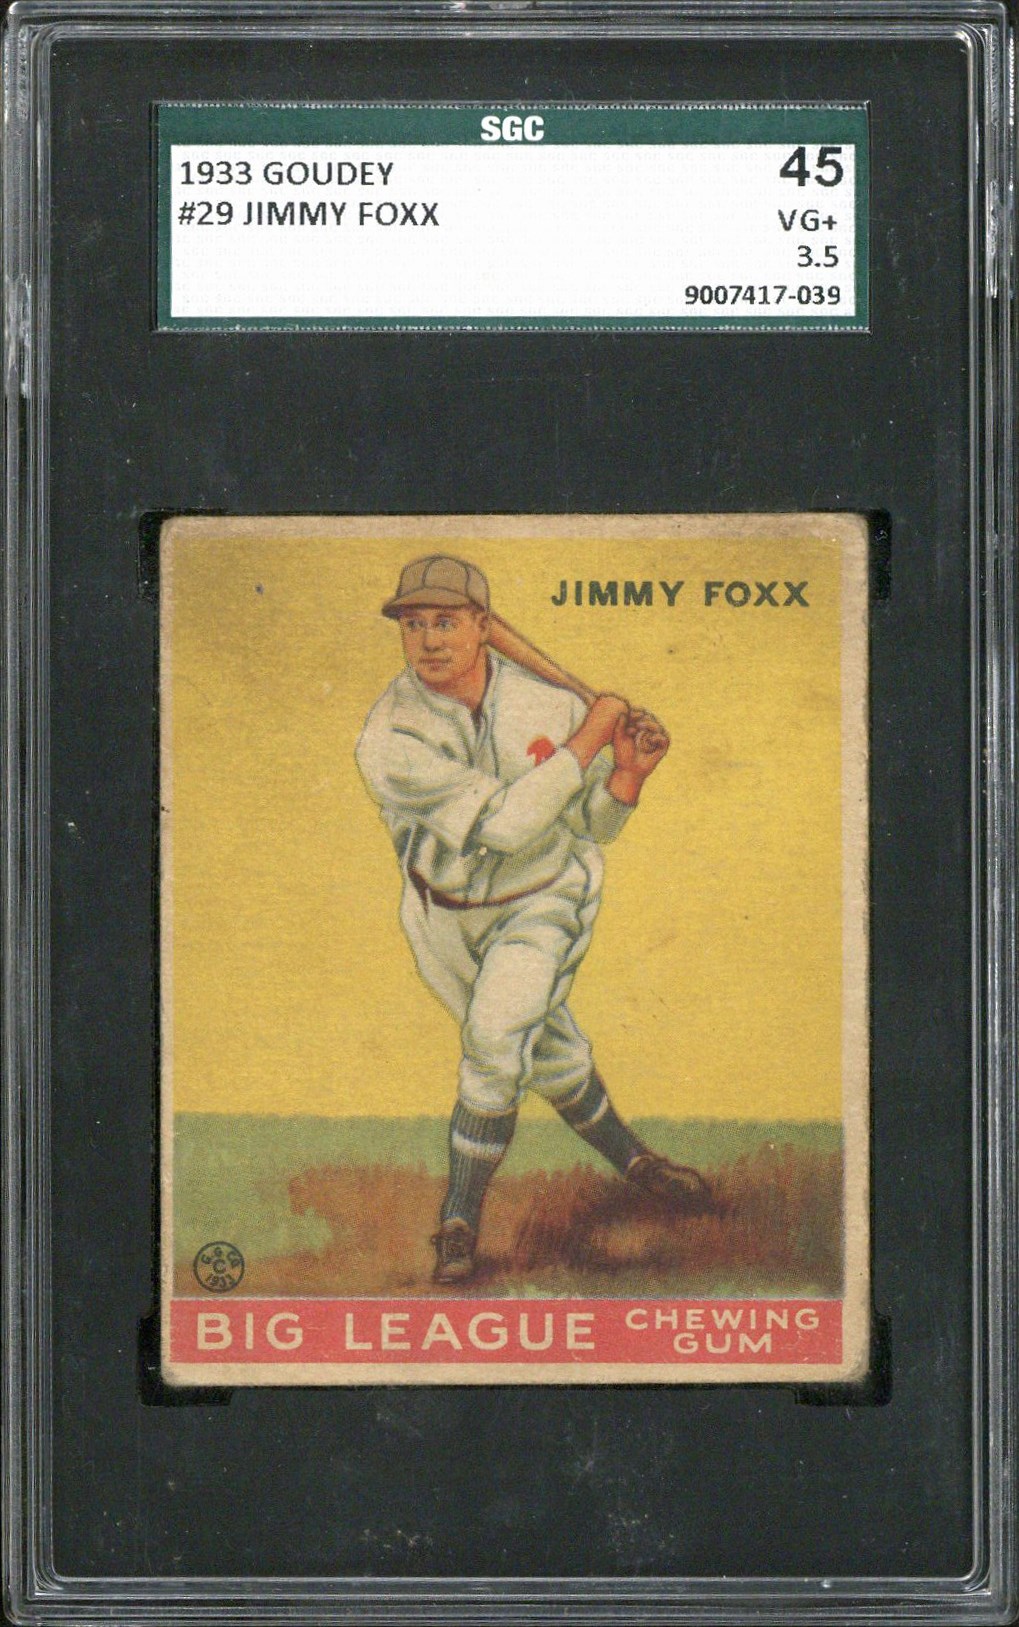 1933 Goudey #29 Jimmy Foxx (HOF) - SGC VG+ 3.5